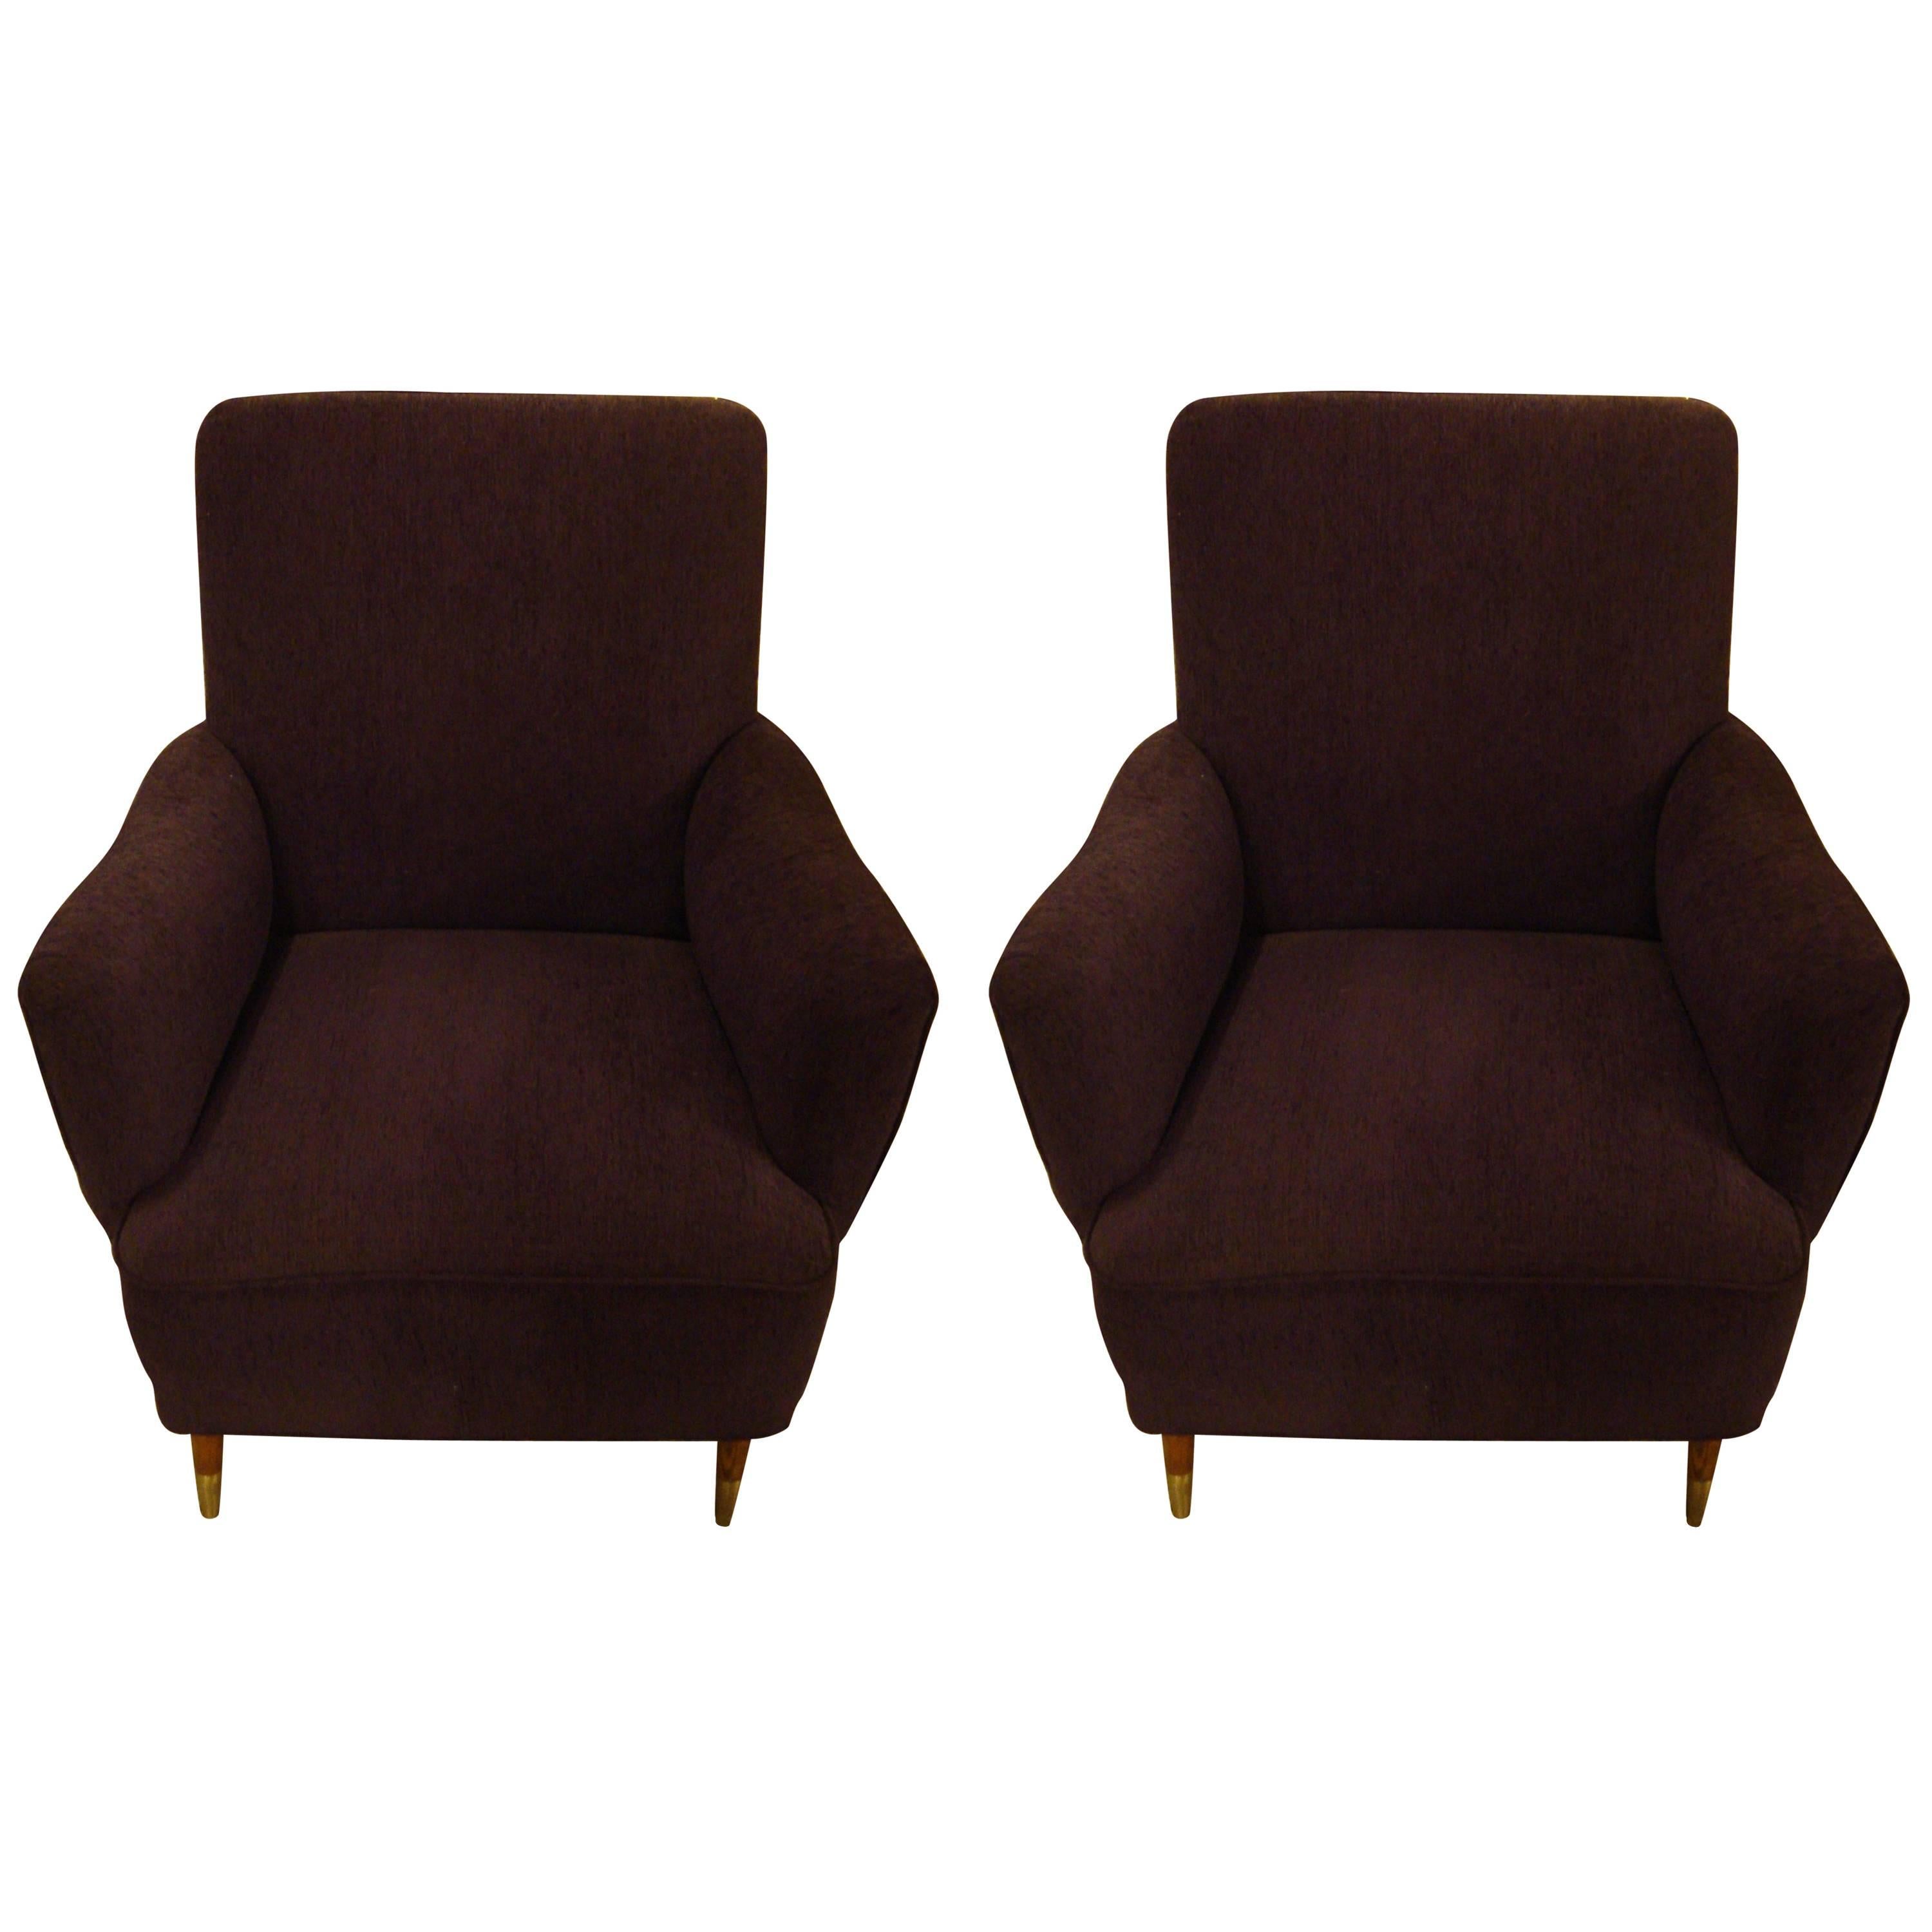 Pair of Gio Ponti Style Mid Century Modern Arm Lounge Chairs